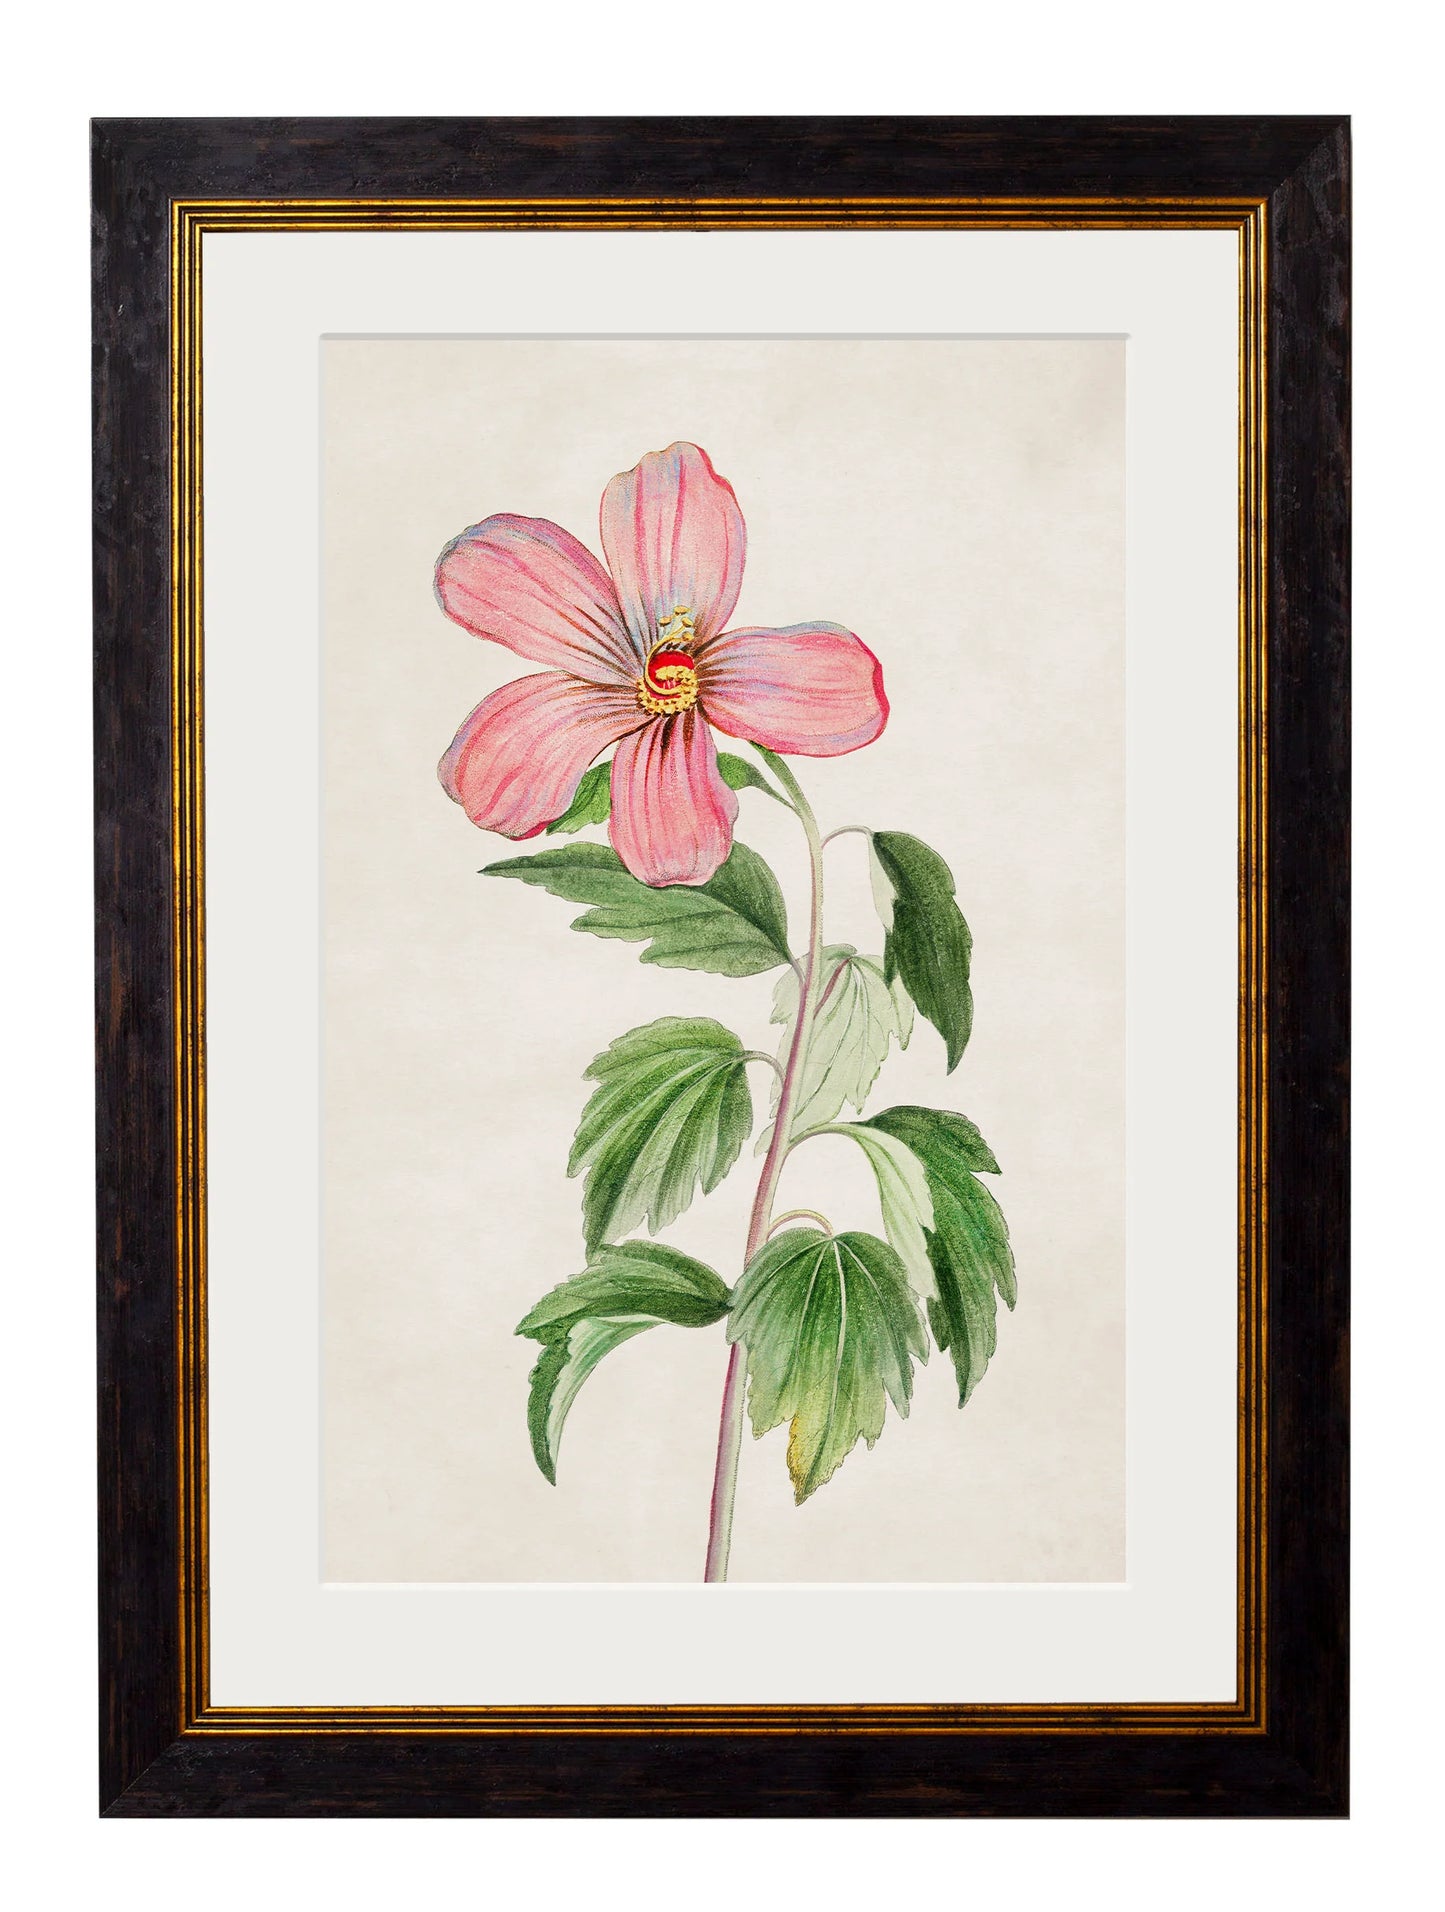 Flowering Plants c.1780 Framed Prints